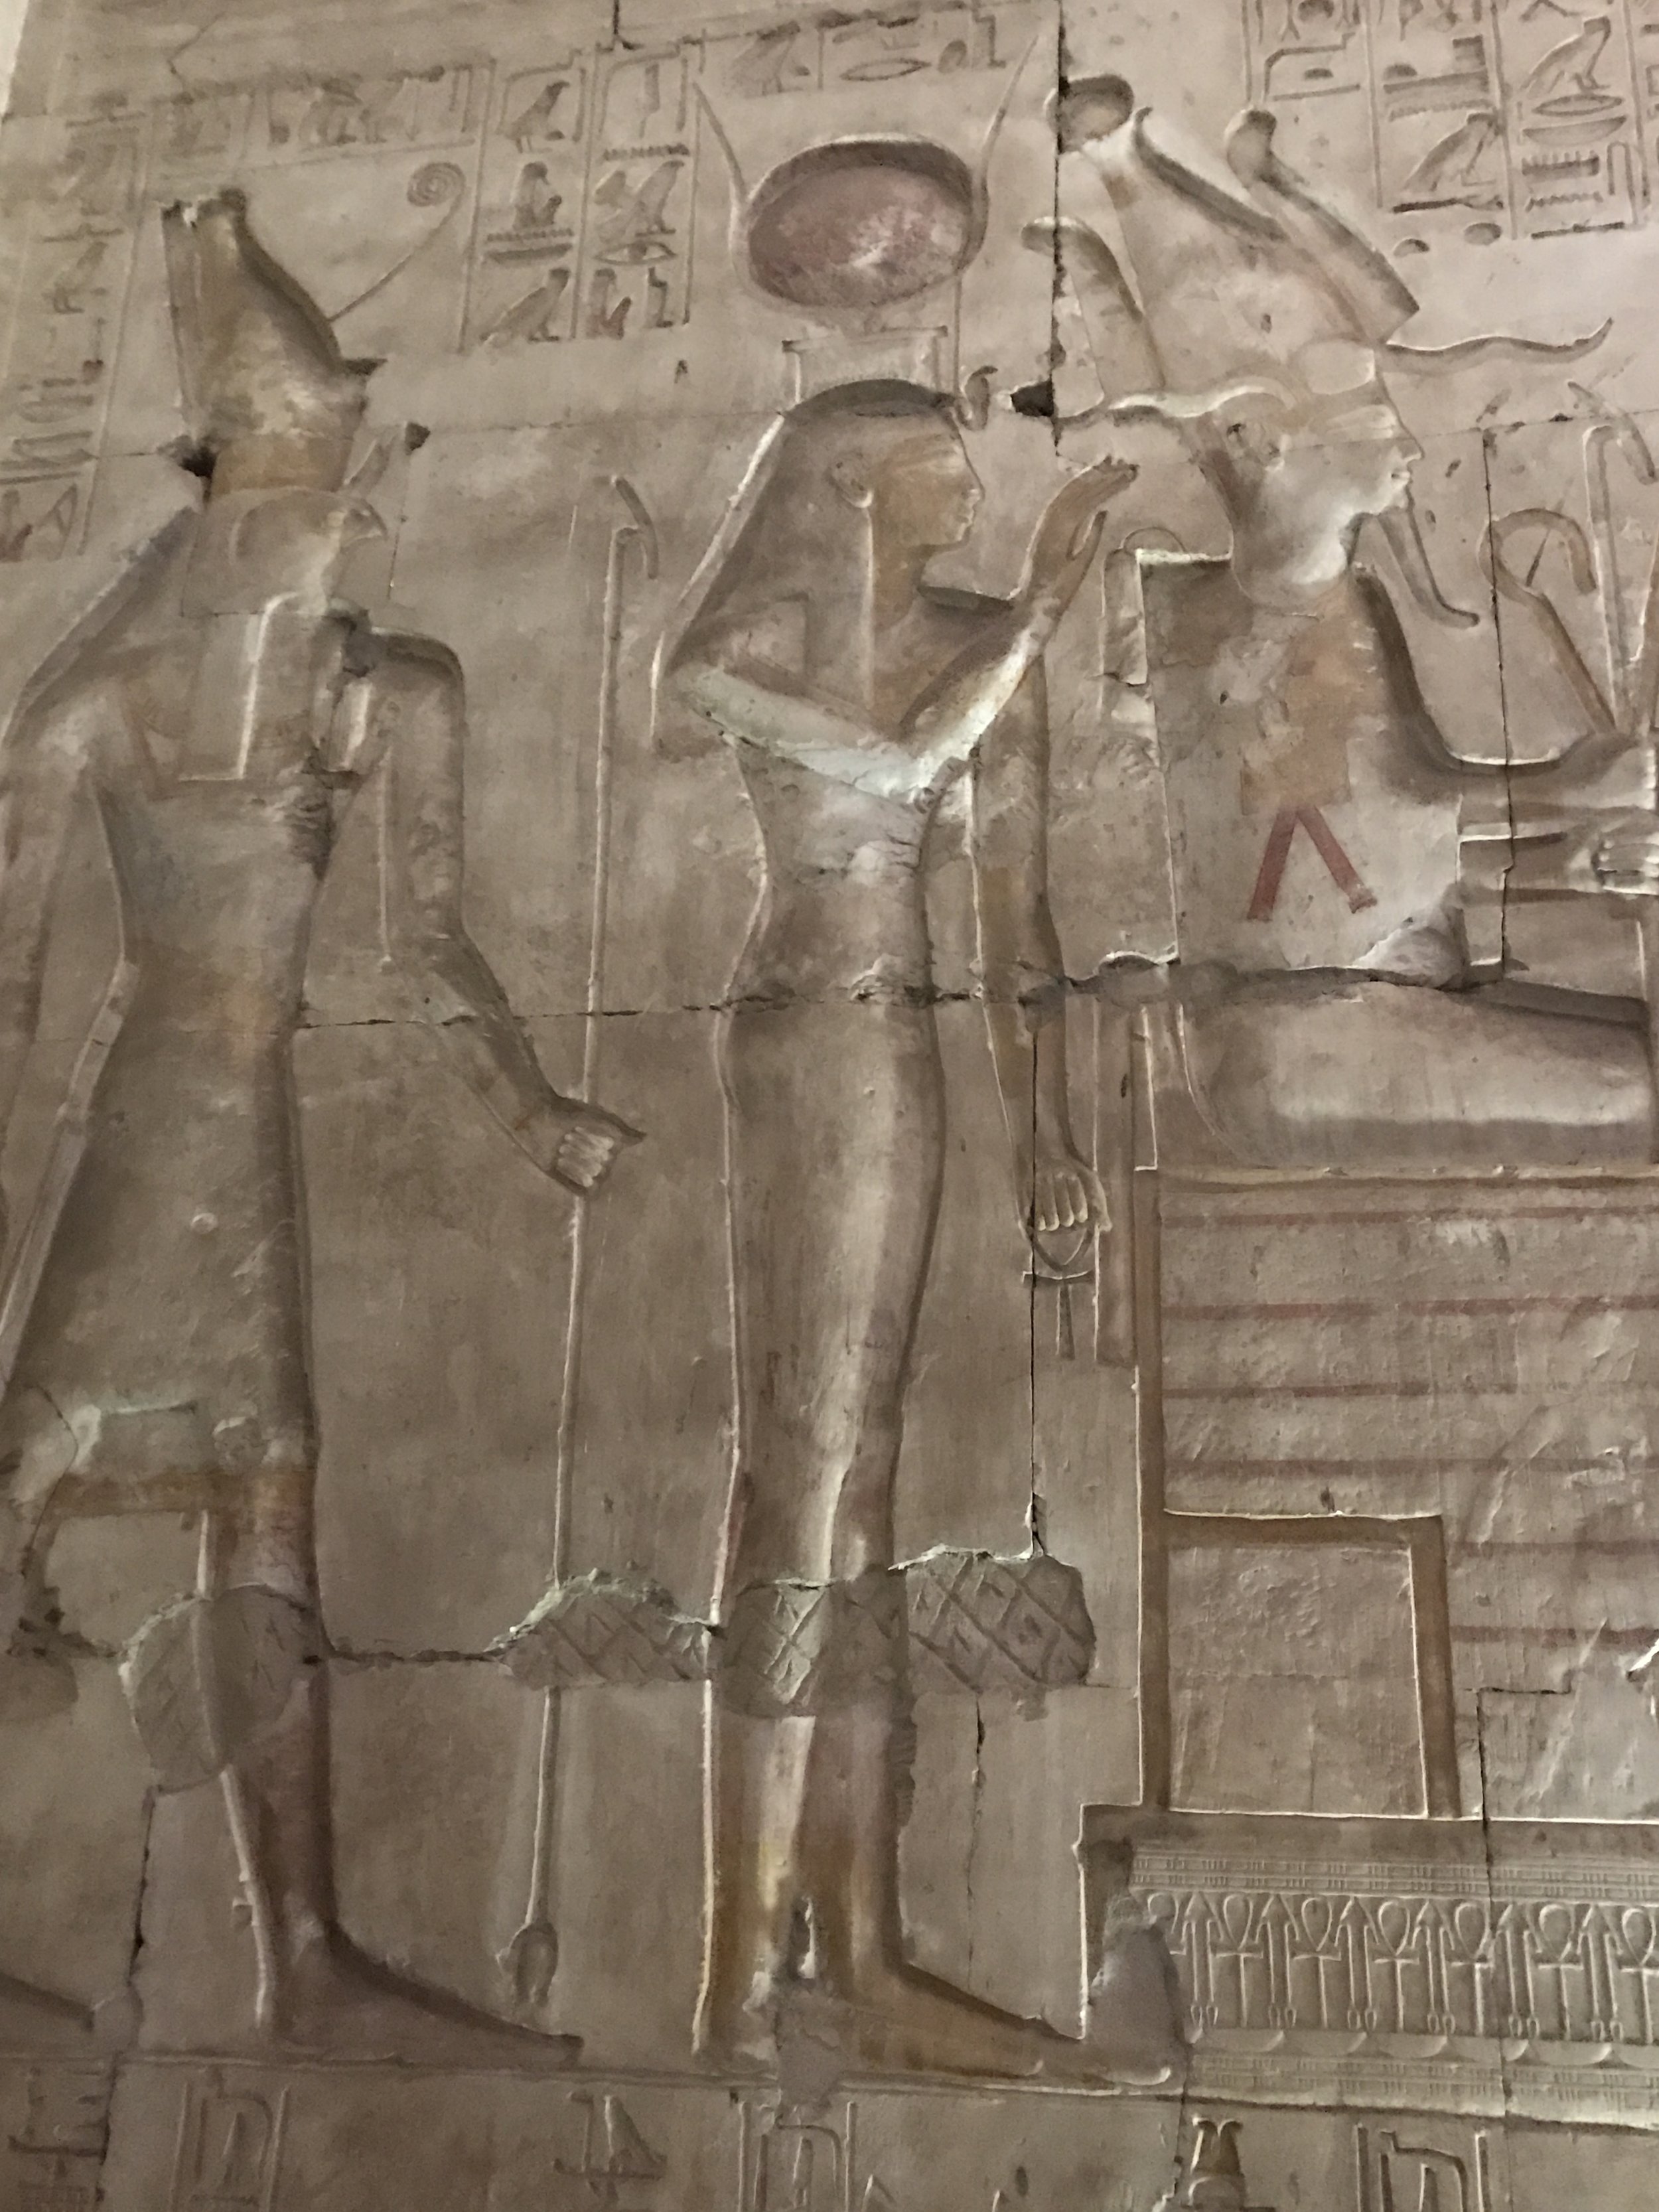 Hieroglyphs at Seti I Temple, Abydos (by Erika Mermuse)